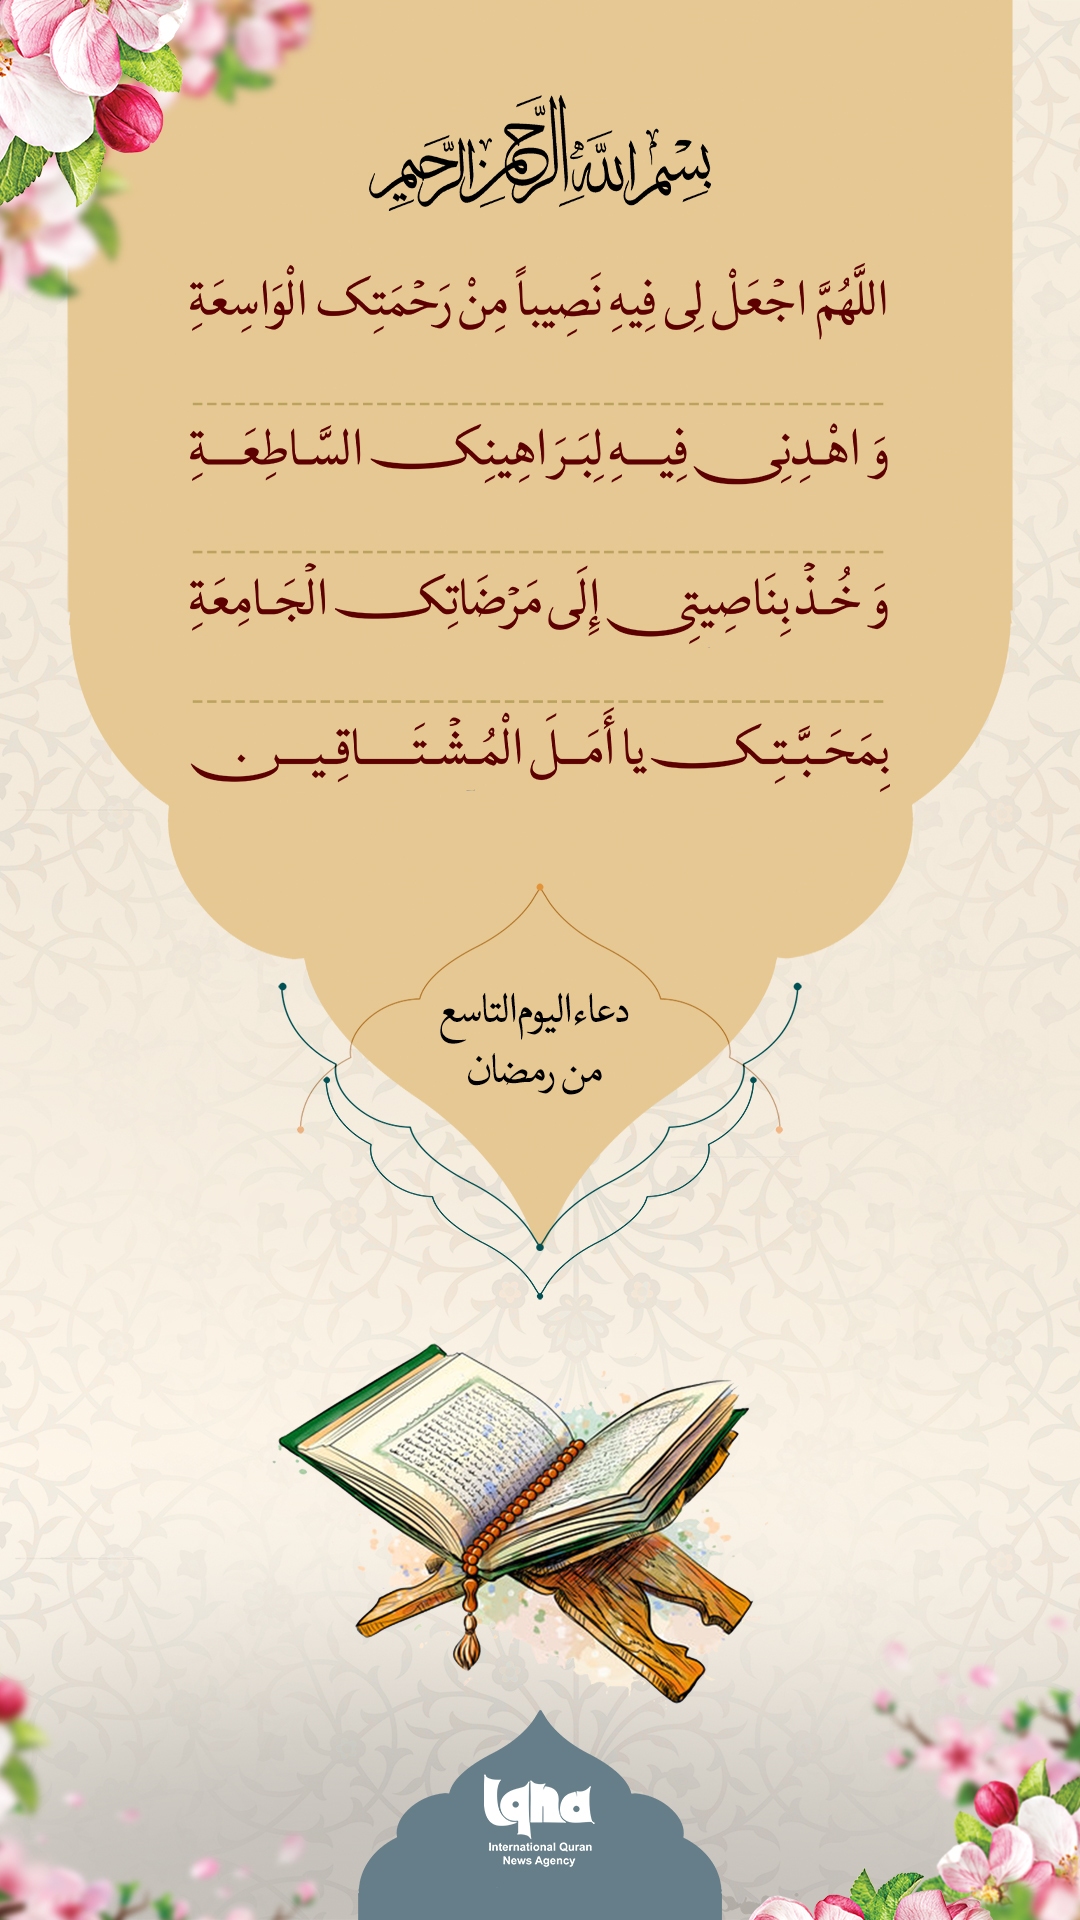 Ramadan Daily Supplications: Day 9